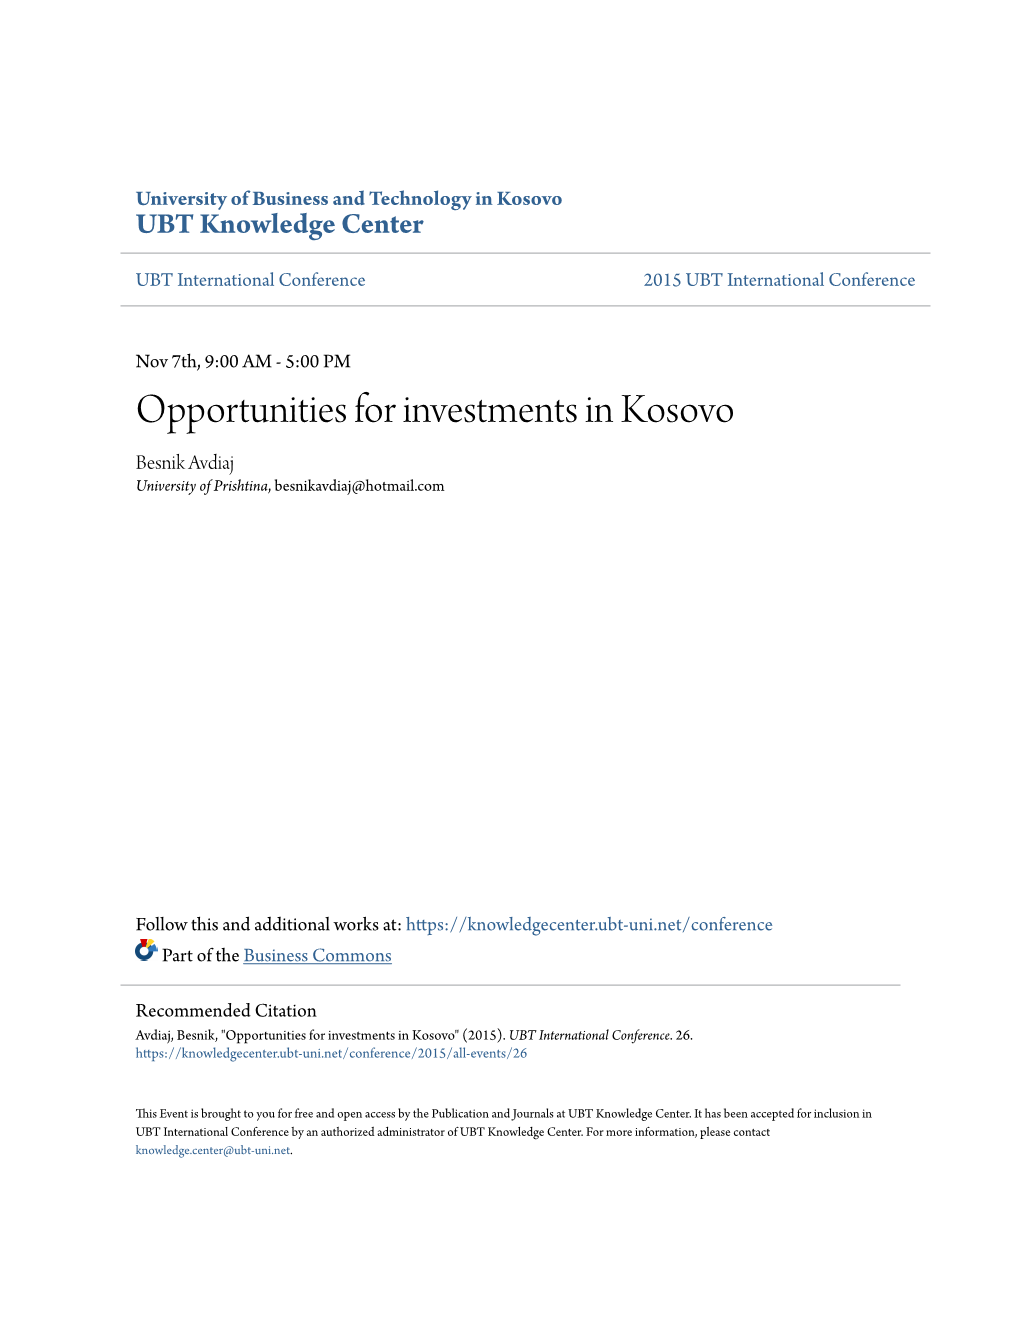 Opportunities for Investments in Kosovo Besnik Avdiaj University of Prishtina, Besnikavdiaj@Hotmail.Com